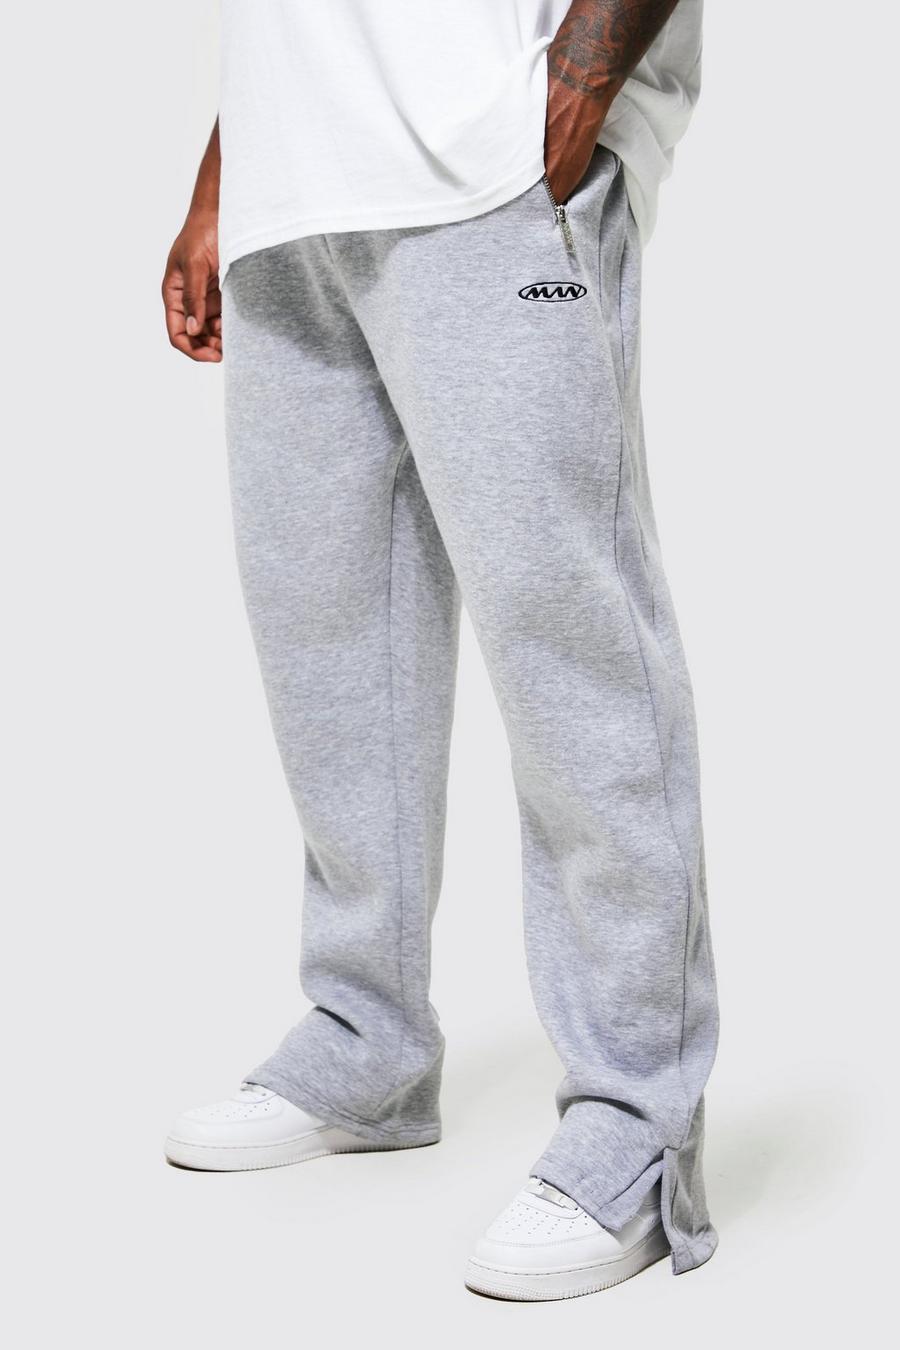 Pantaloni tuta Plus Size Man con nervature e spacco, Grey marl gris